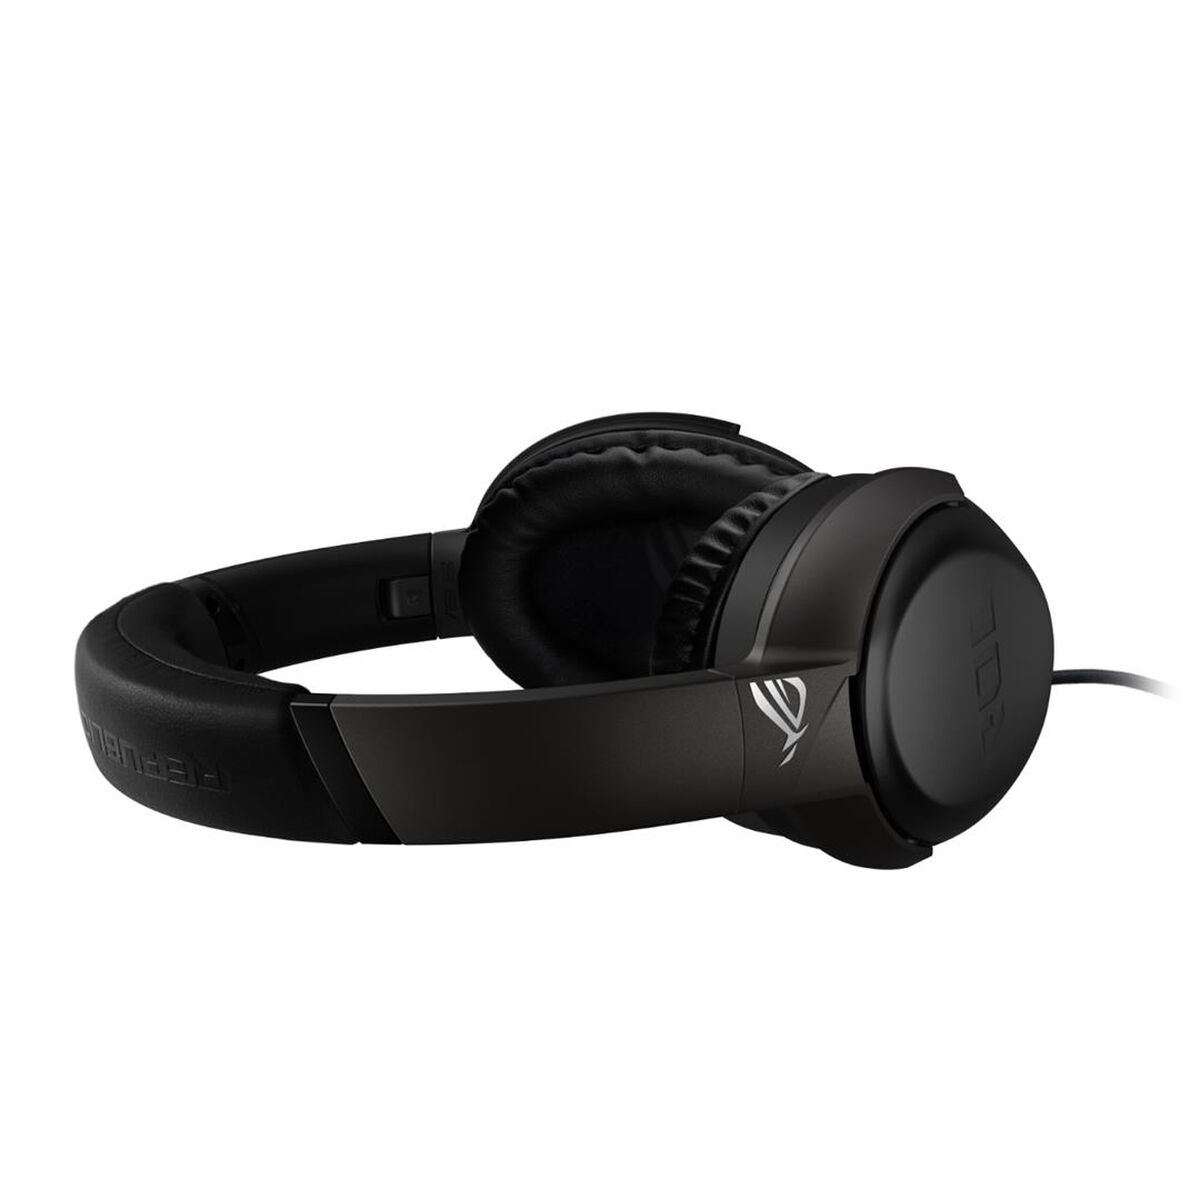 Headphones with Headband Asus ROG Strix Go Core